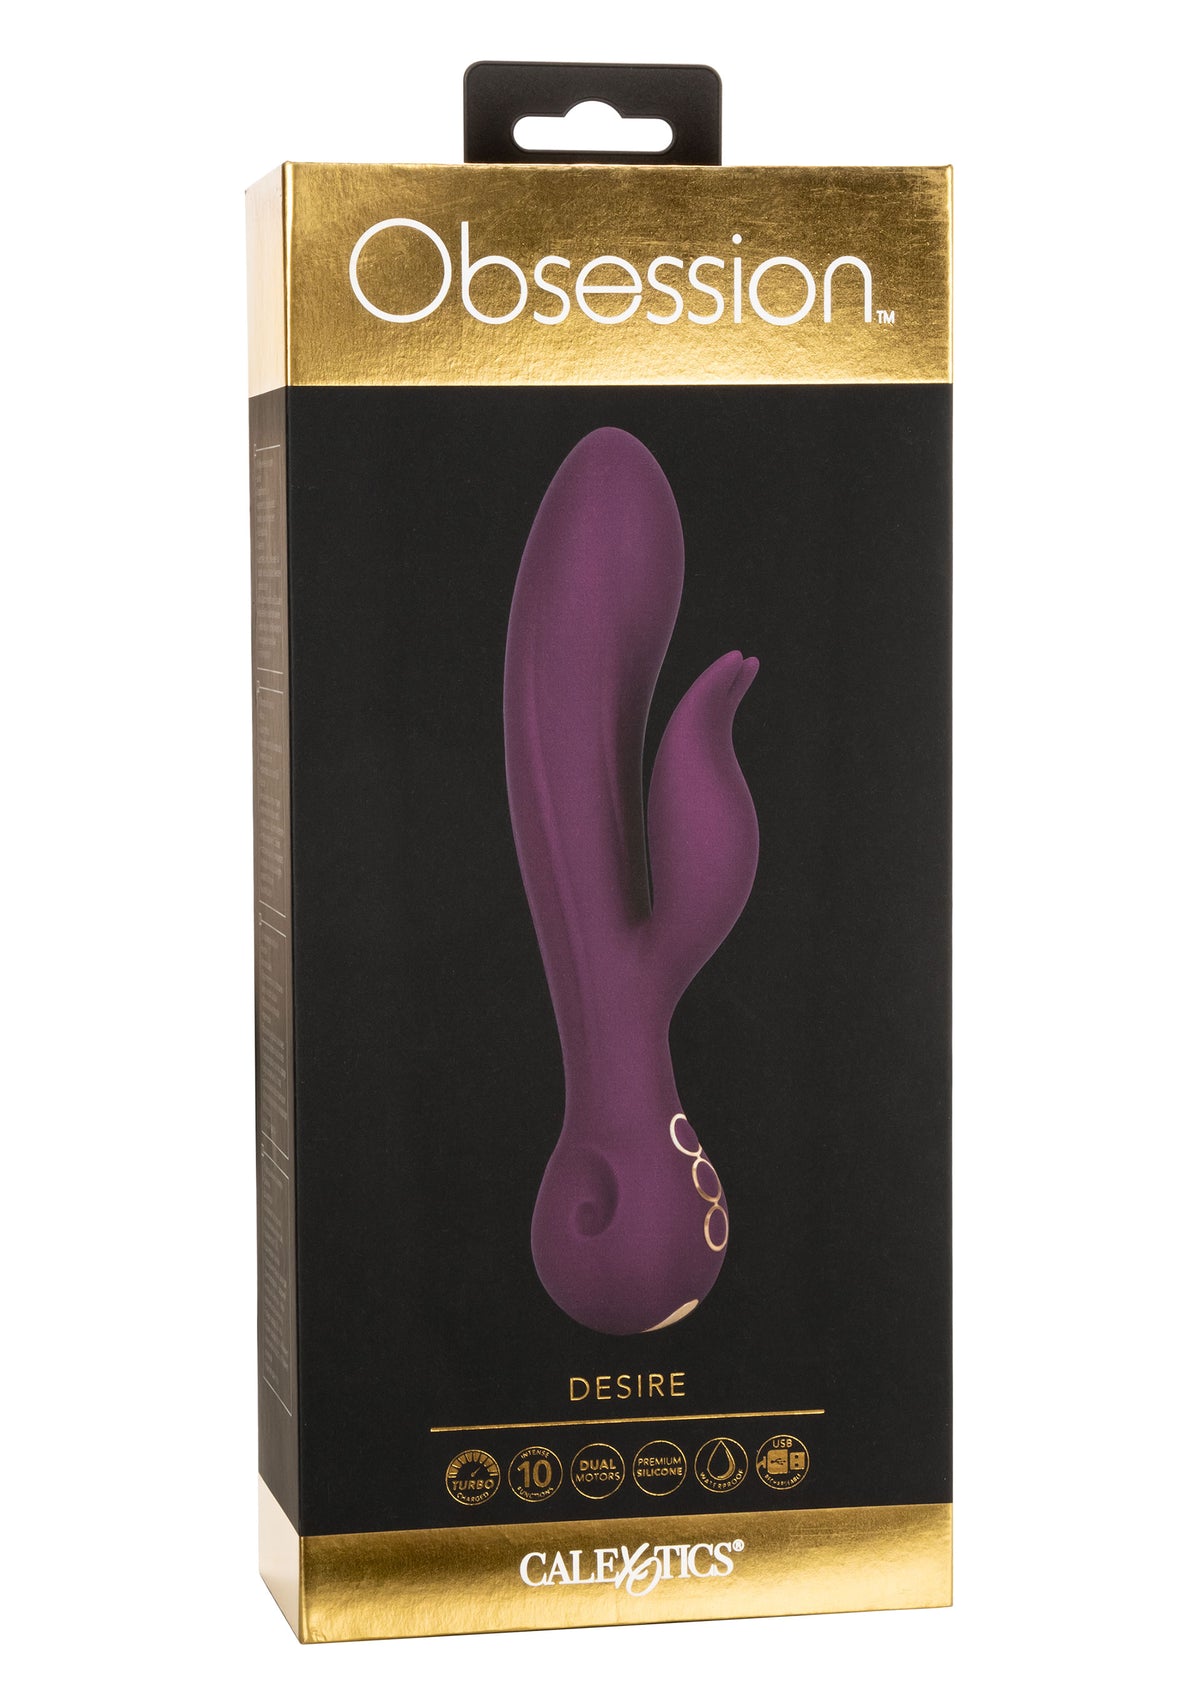 Obsession Desire